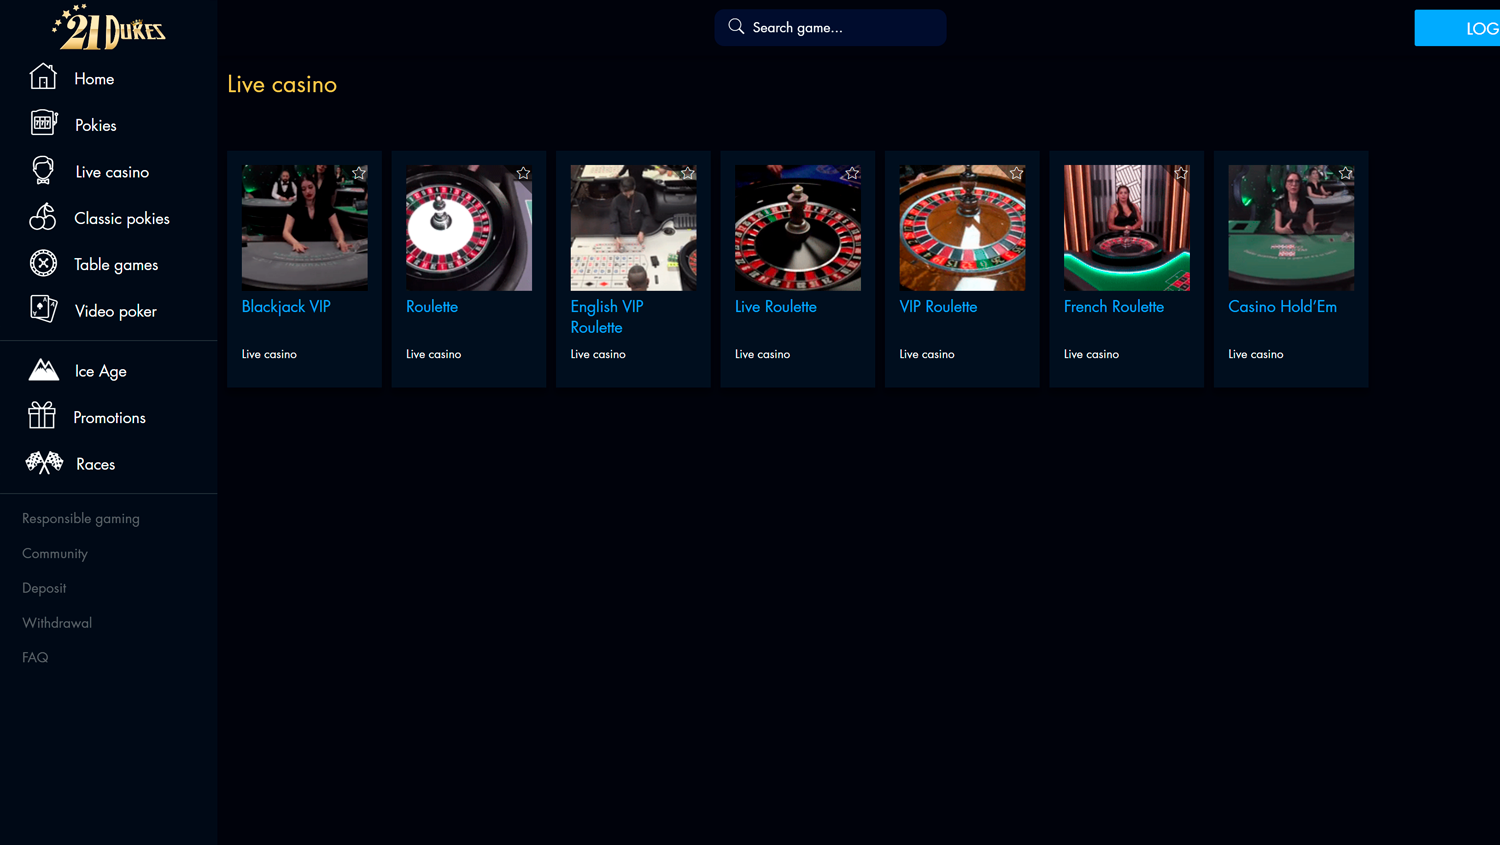 Live casino page on the 21Dukes casino site